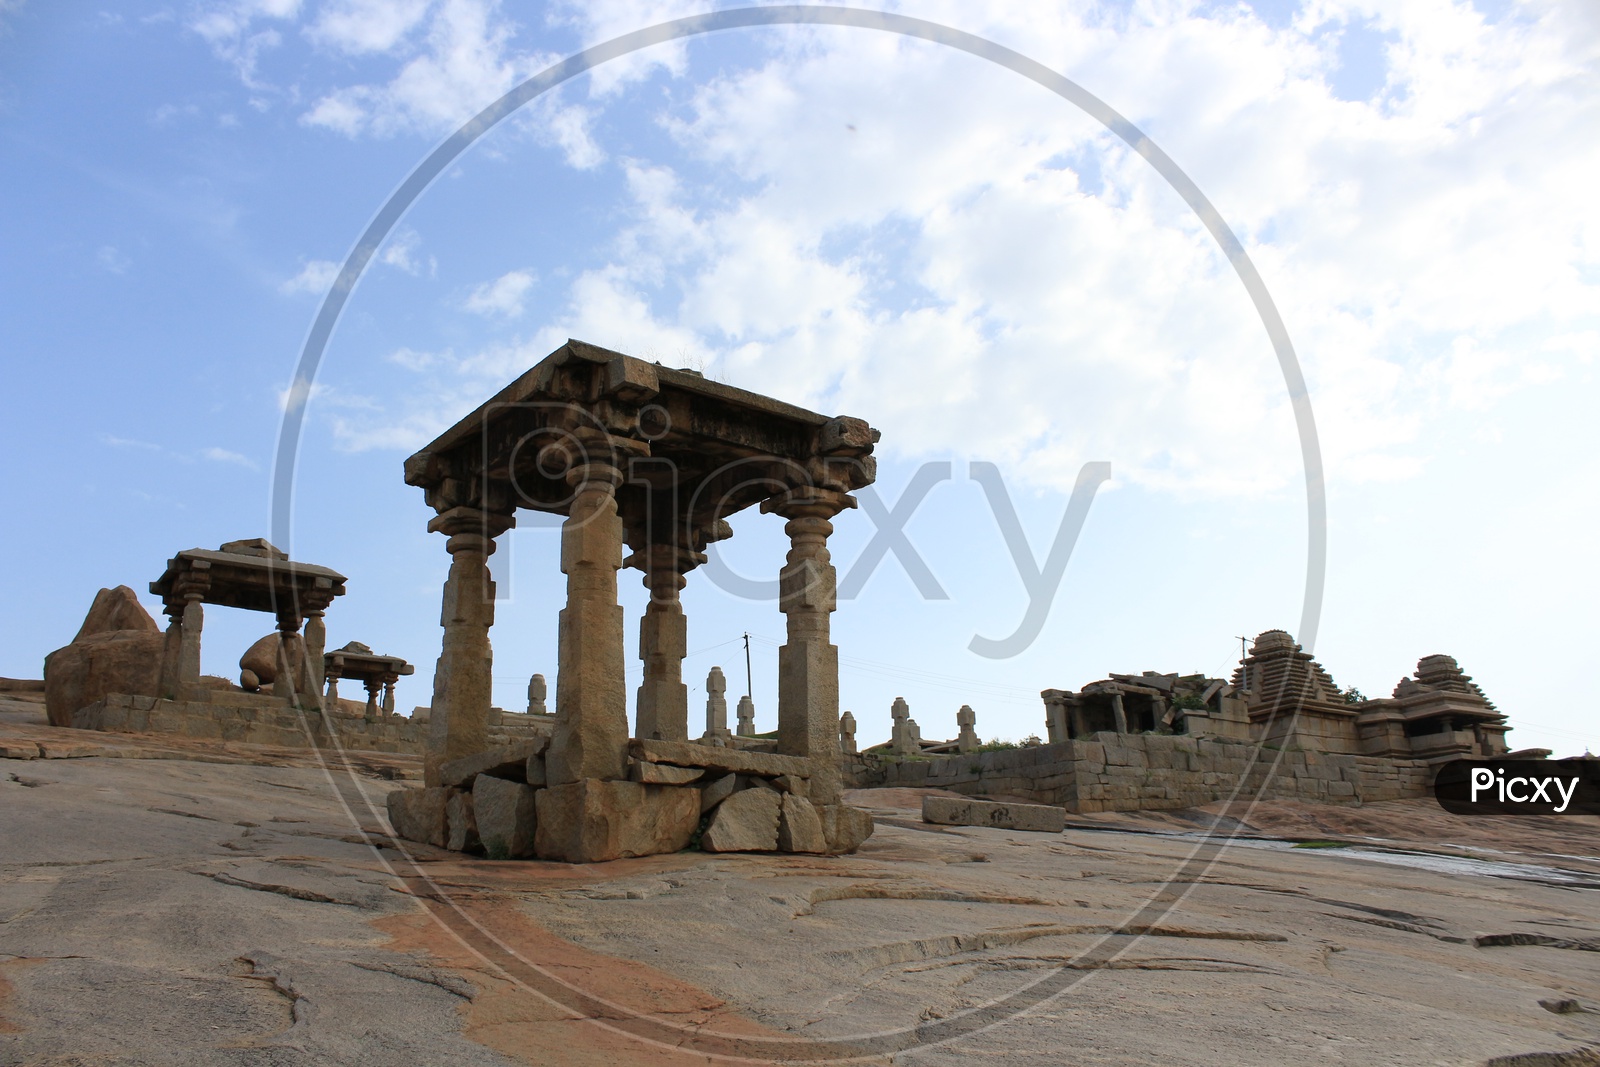 Historical Architecture of Hampi / Temples of Hampi